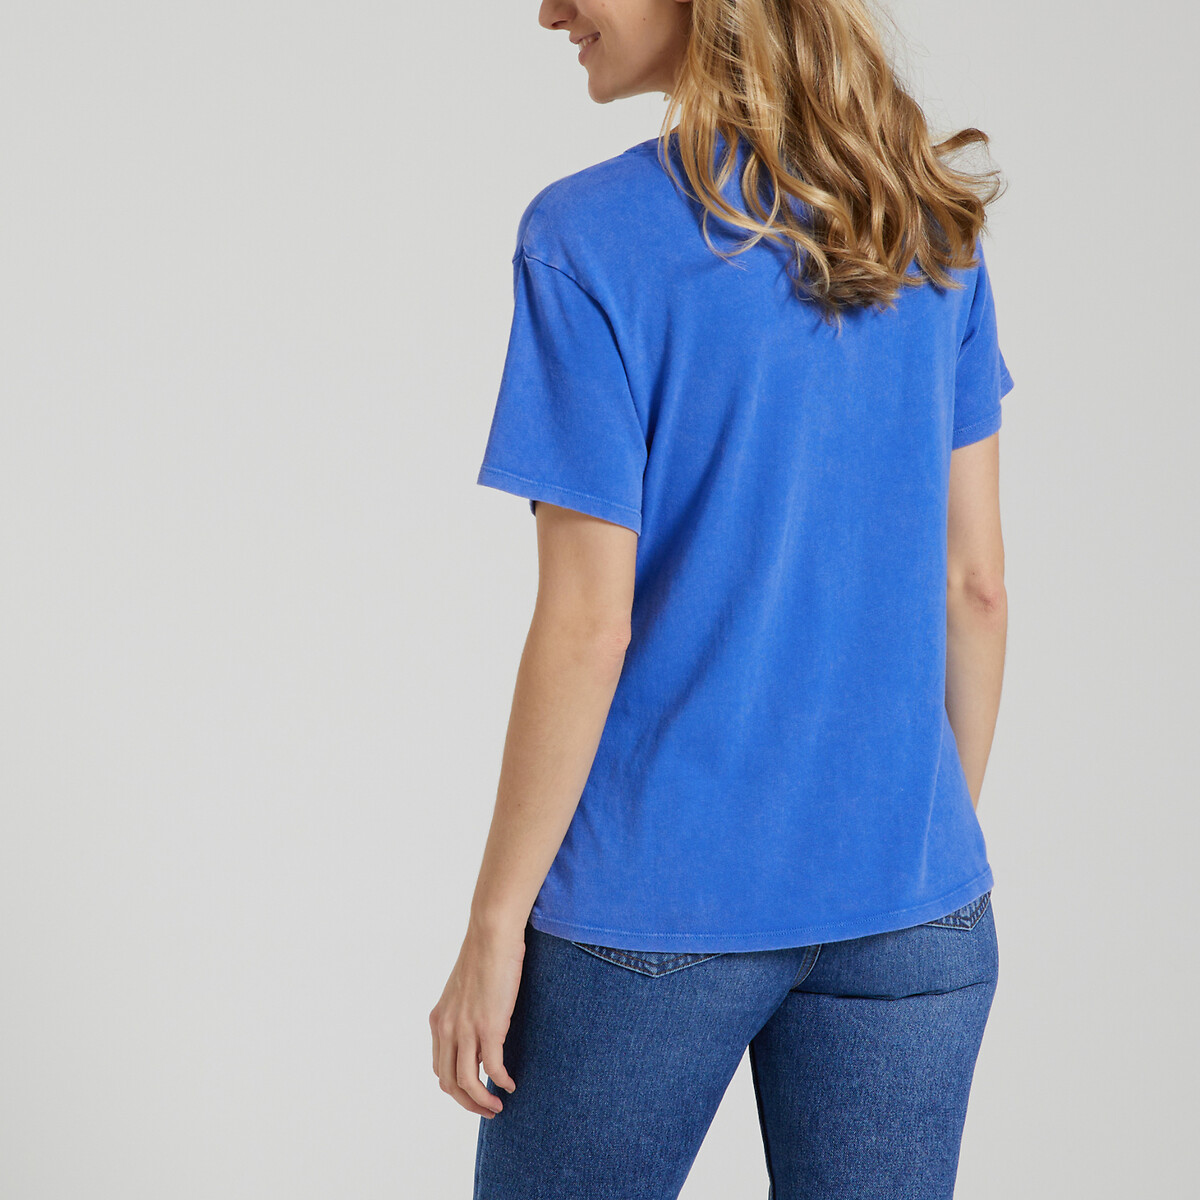 La mit T. Redoute | Freeman T-shirt blau schriftzug Porter